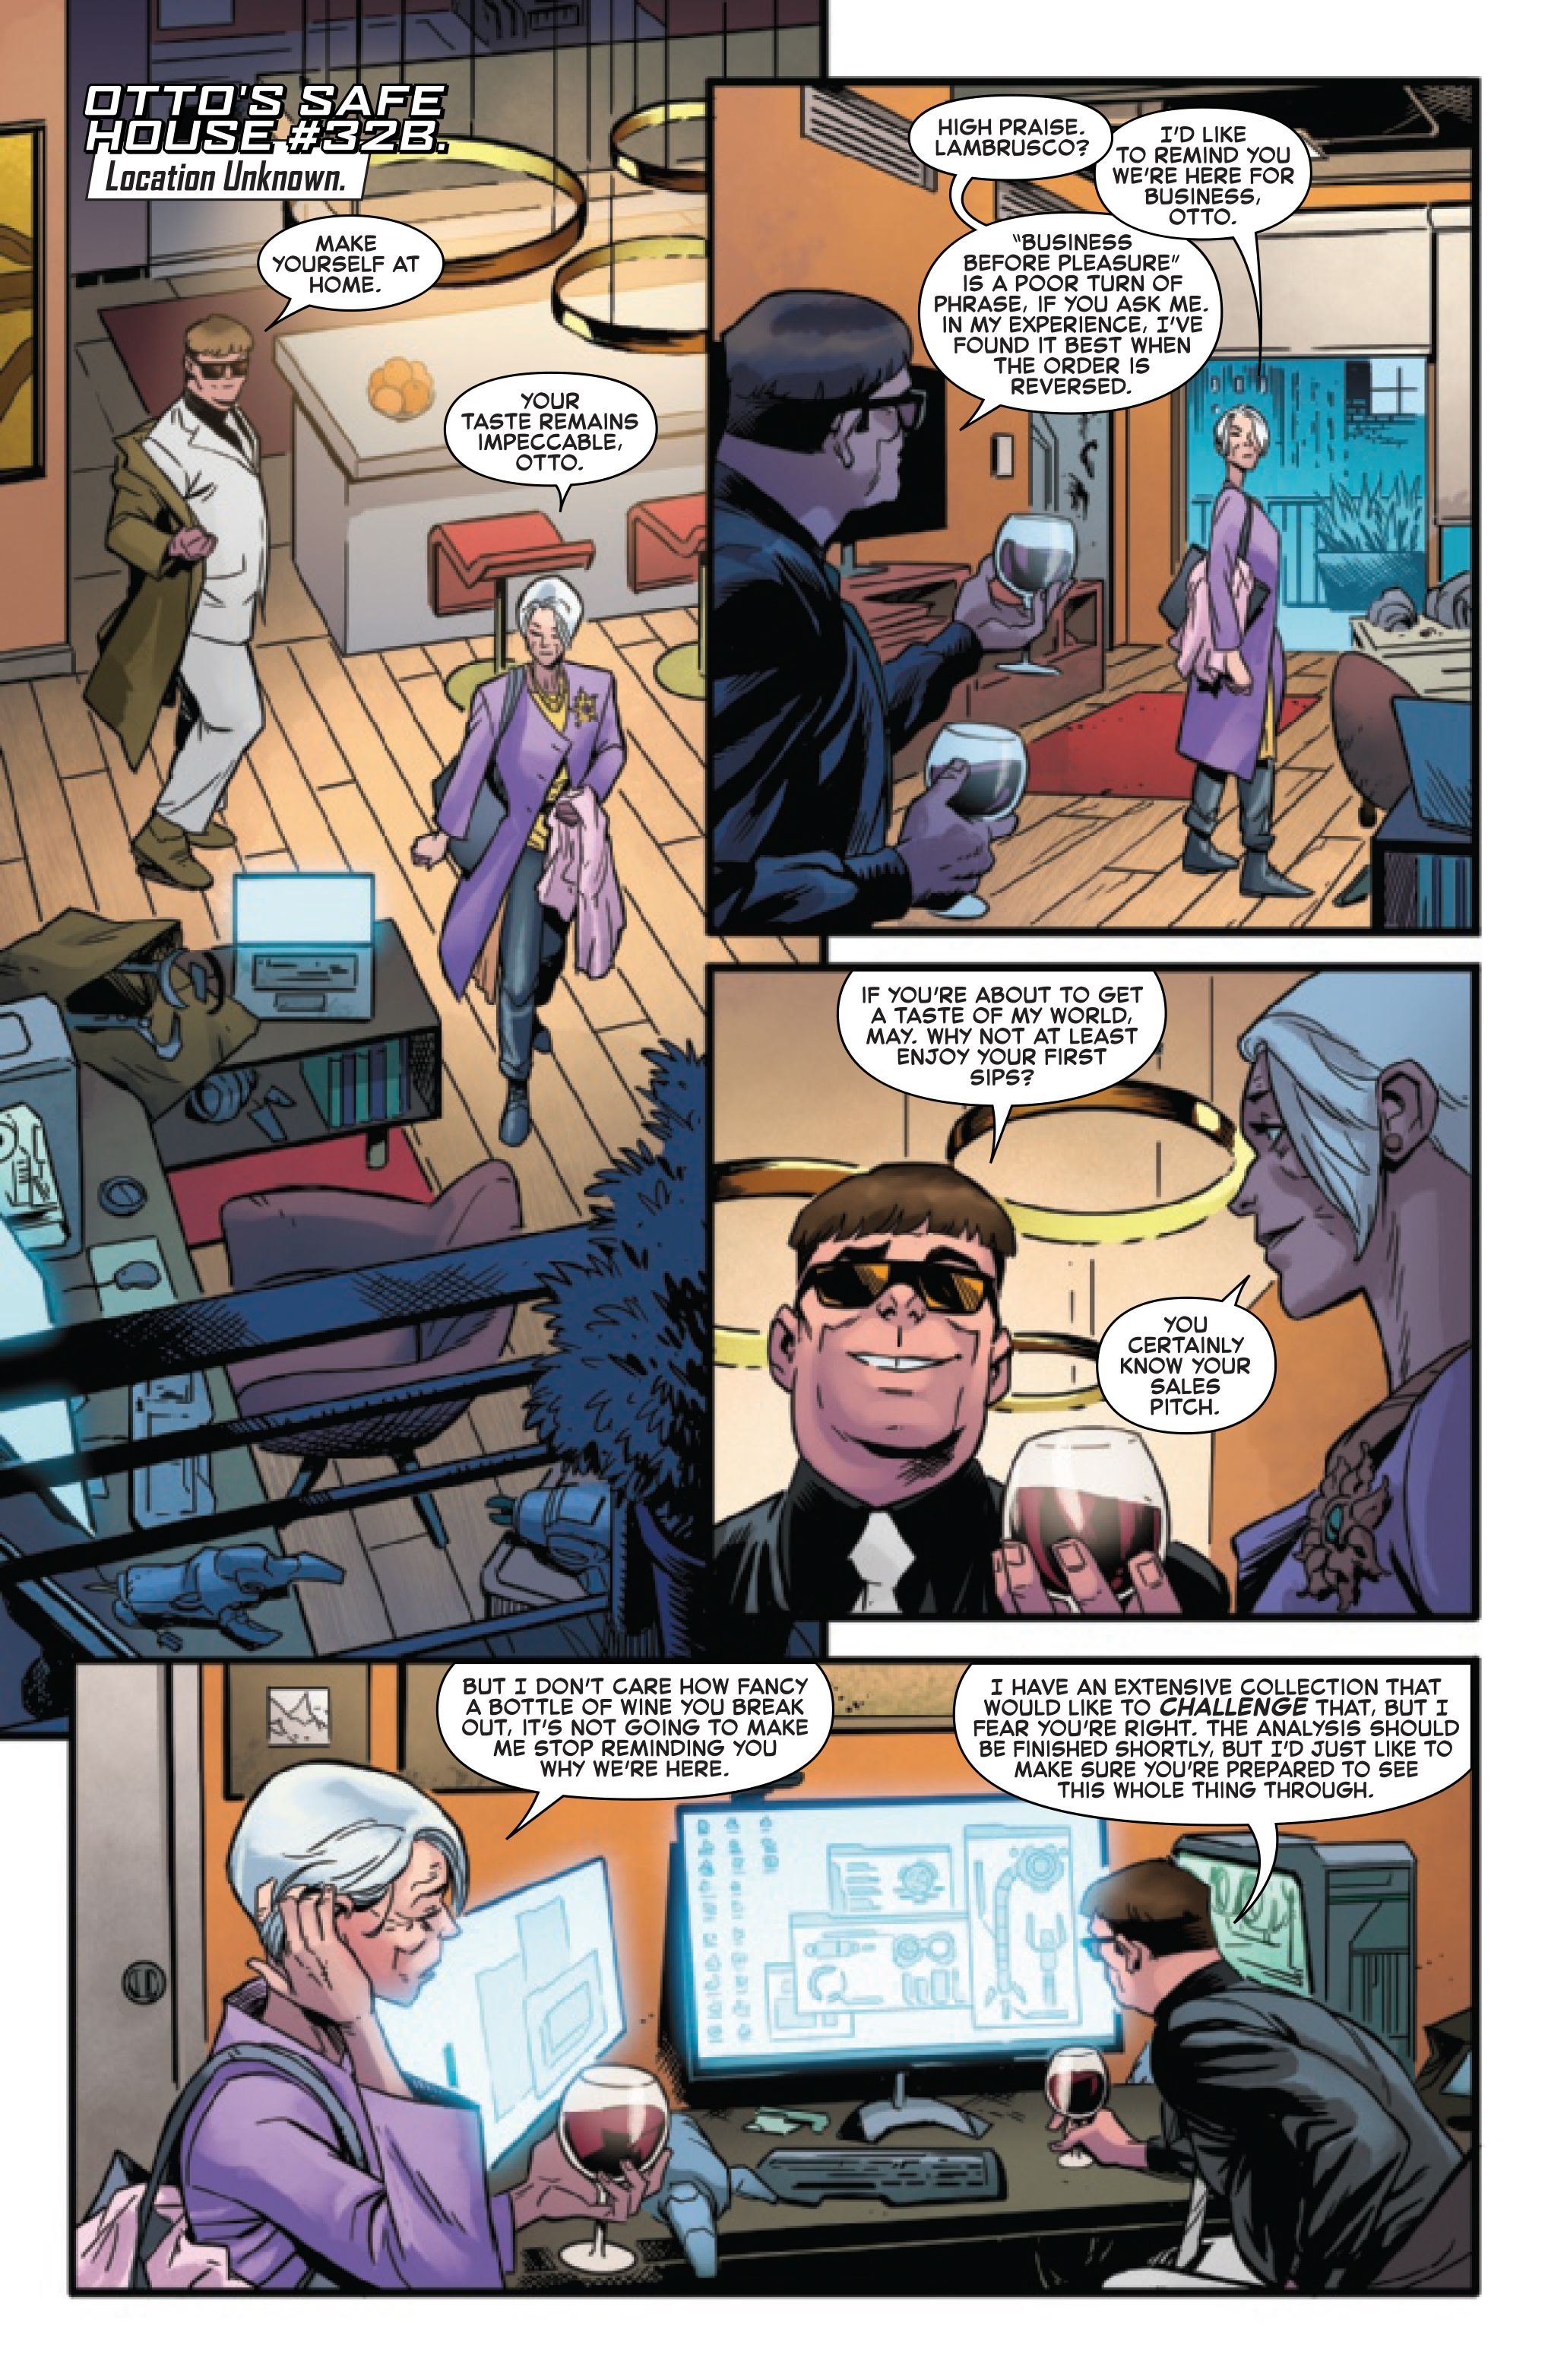 Page 5 of Amazing Spider-Man #80.BEY, by Cody Ziglar, Ivan Fiorelli, Carlos Gomez and Paco Medina.